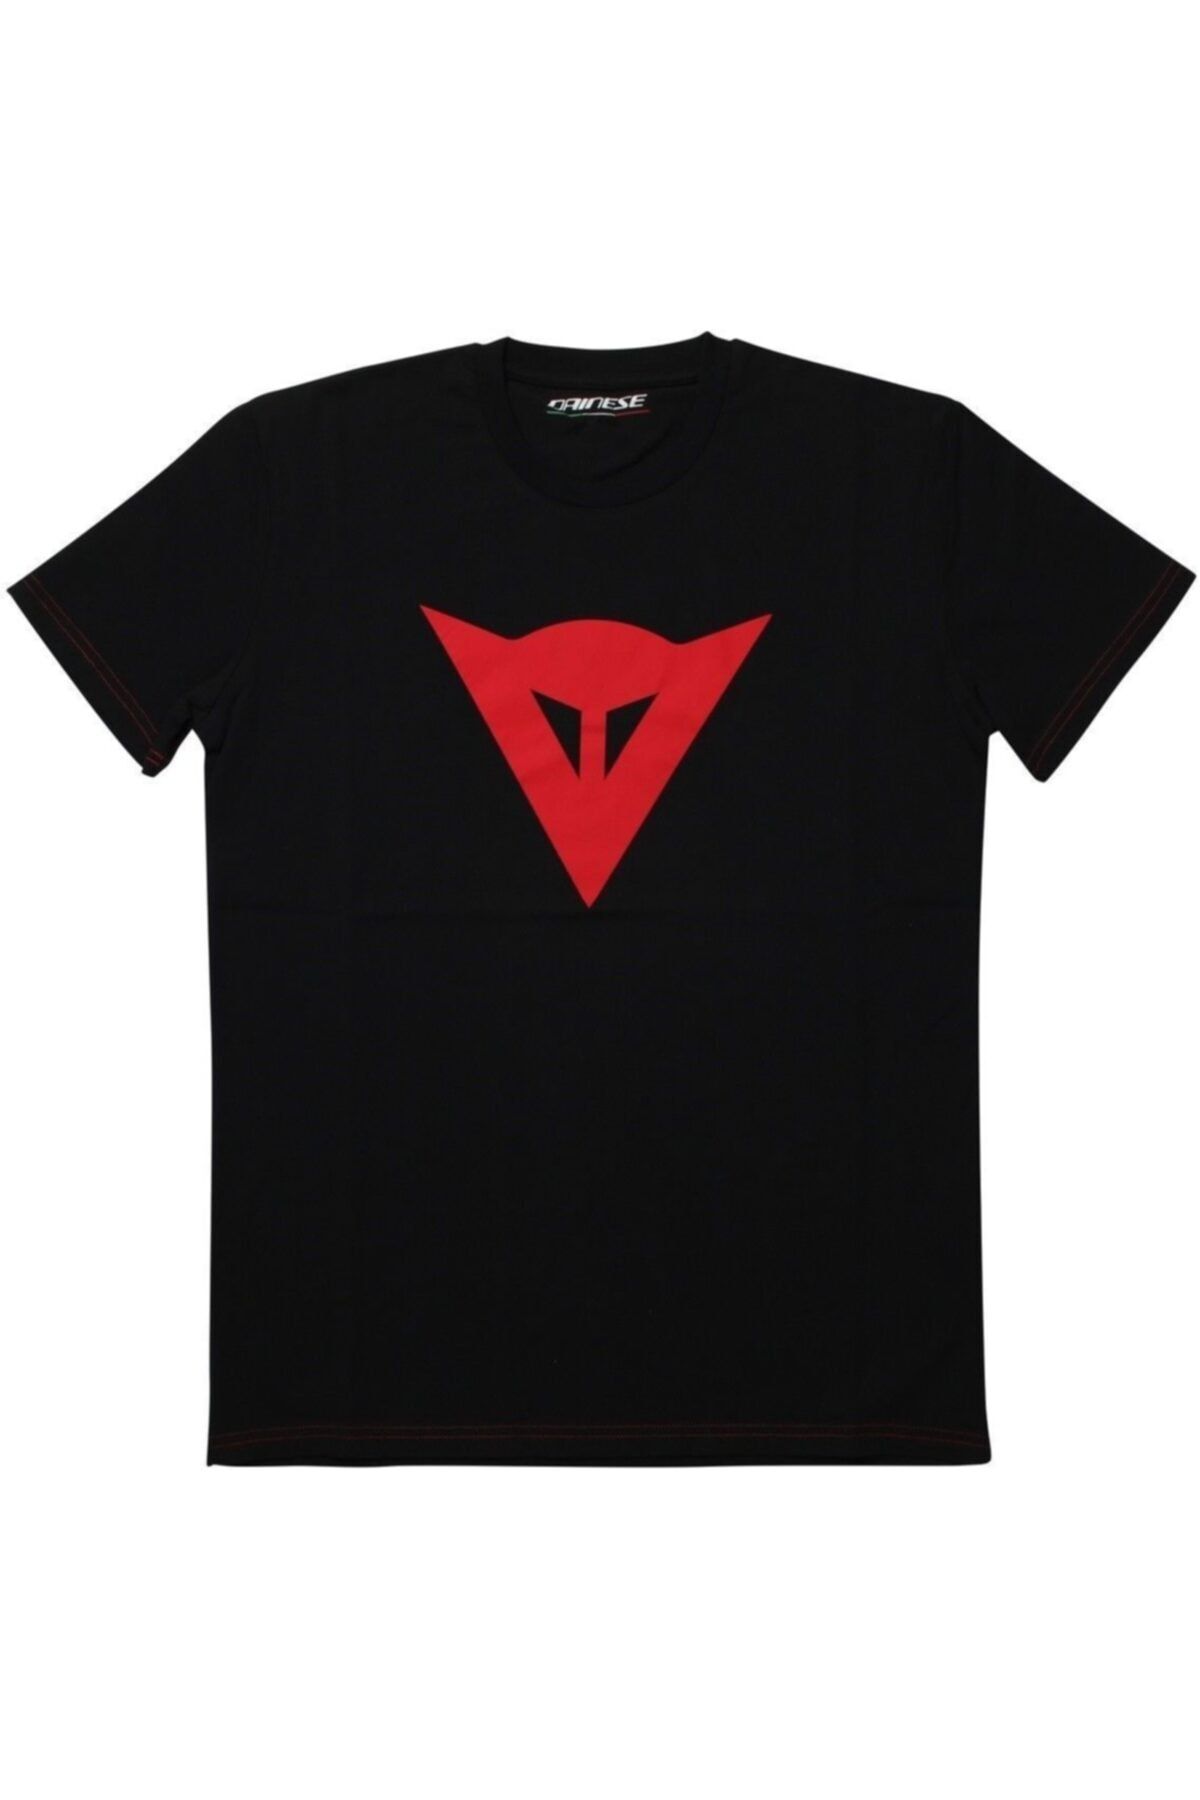 Dainese Speed Demon Erkek Siyah T-shirt Dns-1896742.606